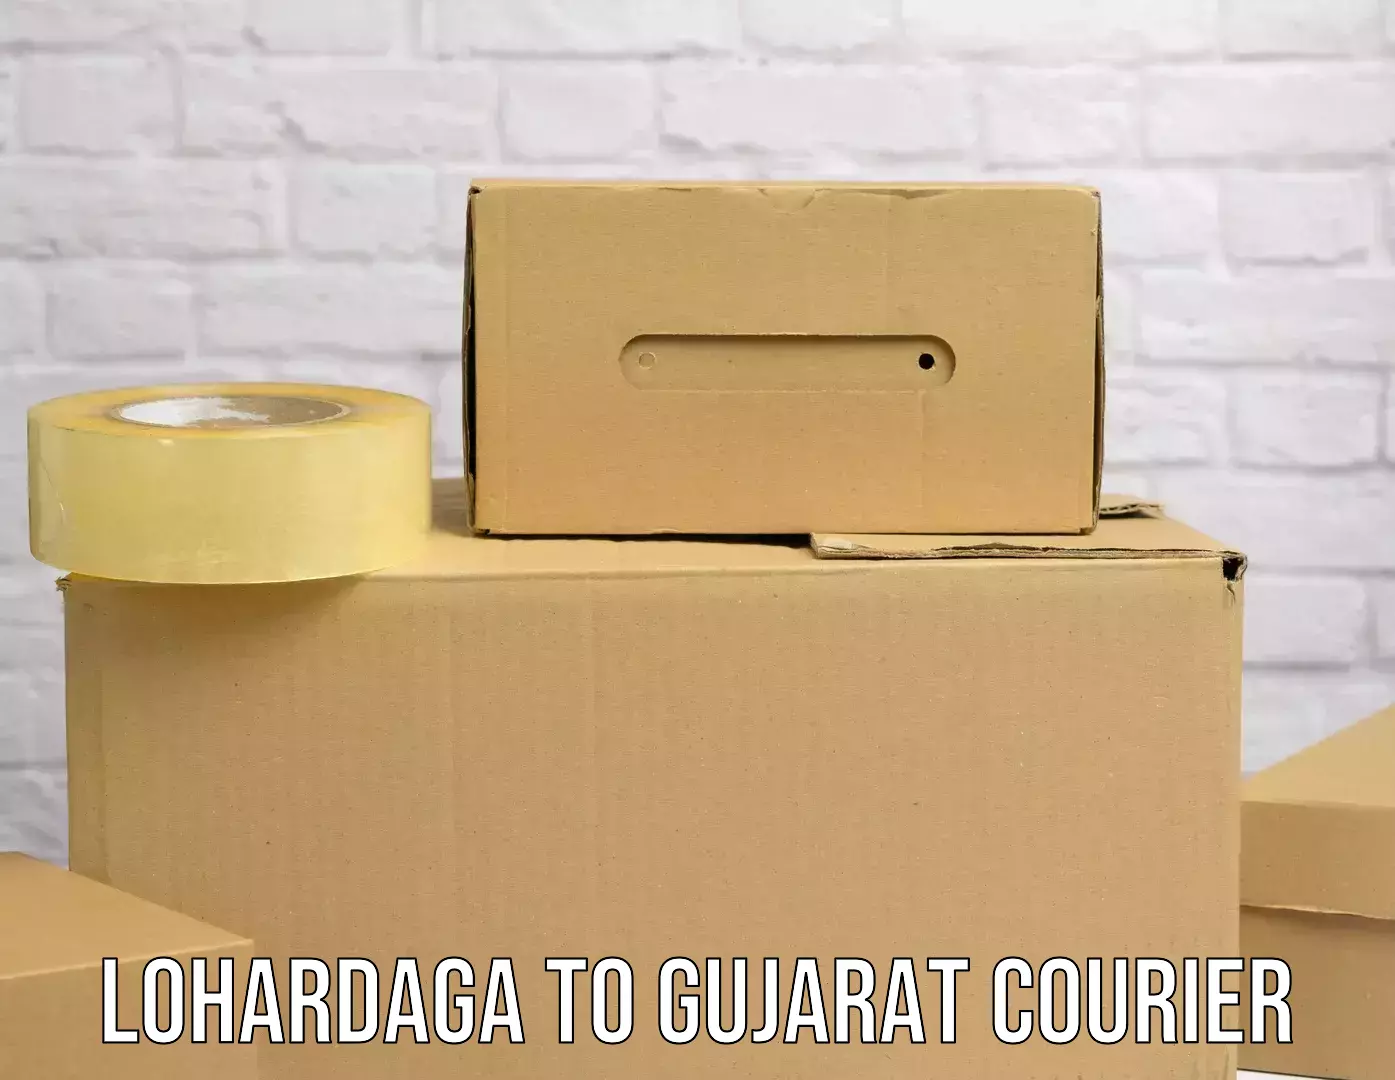 Enhanced tracking features Lohardaga to Gujarat